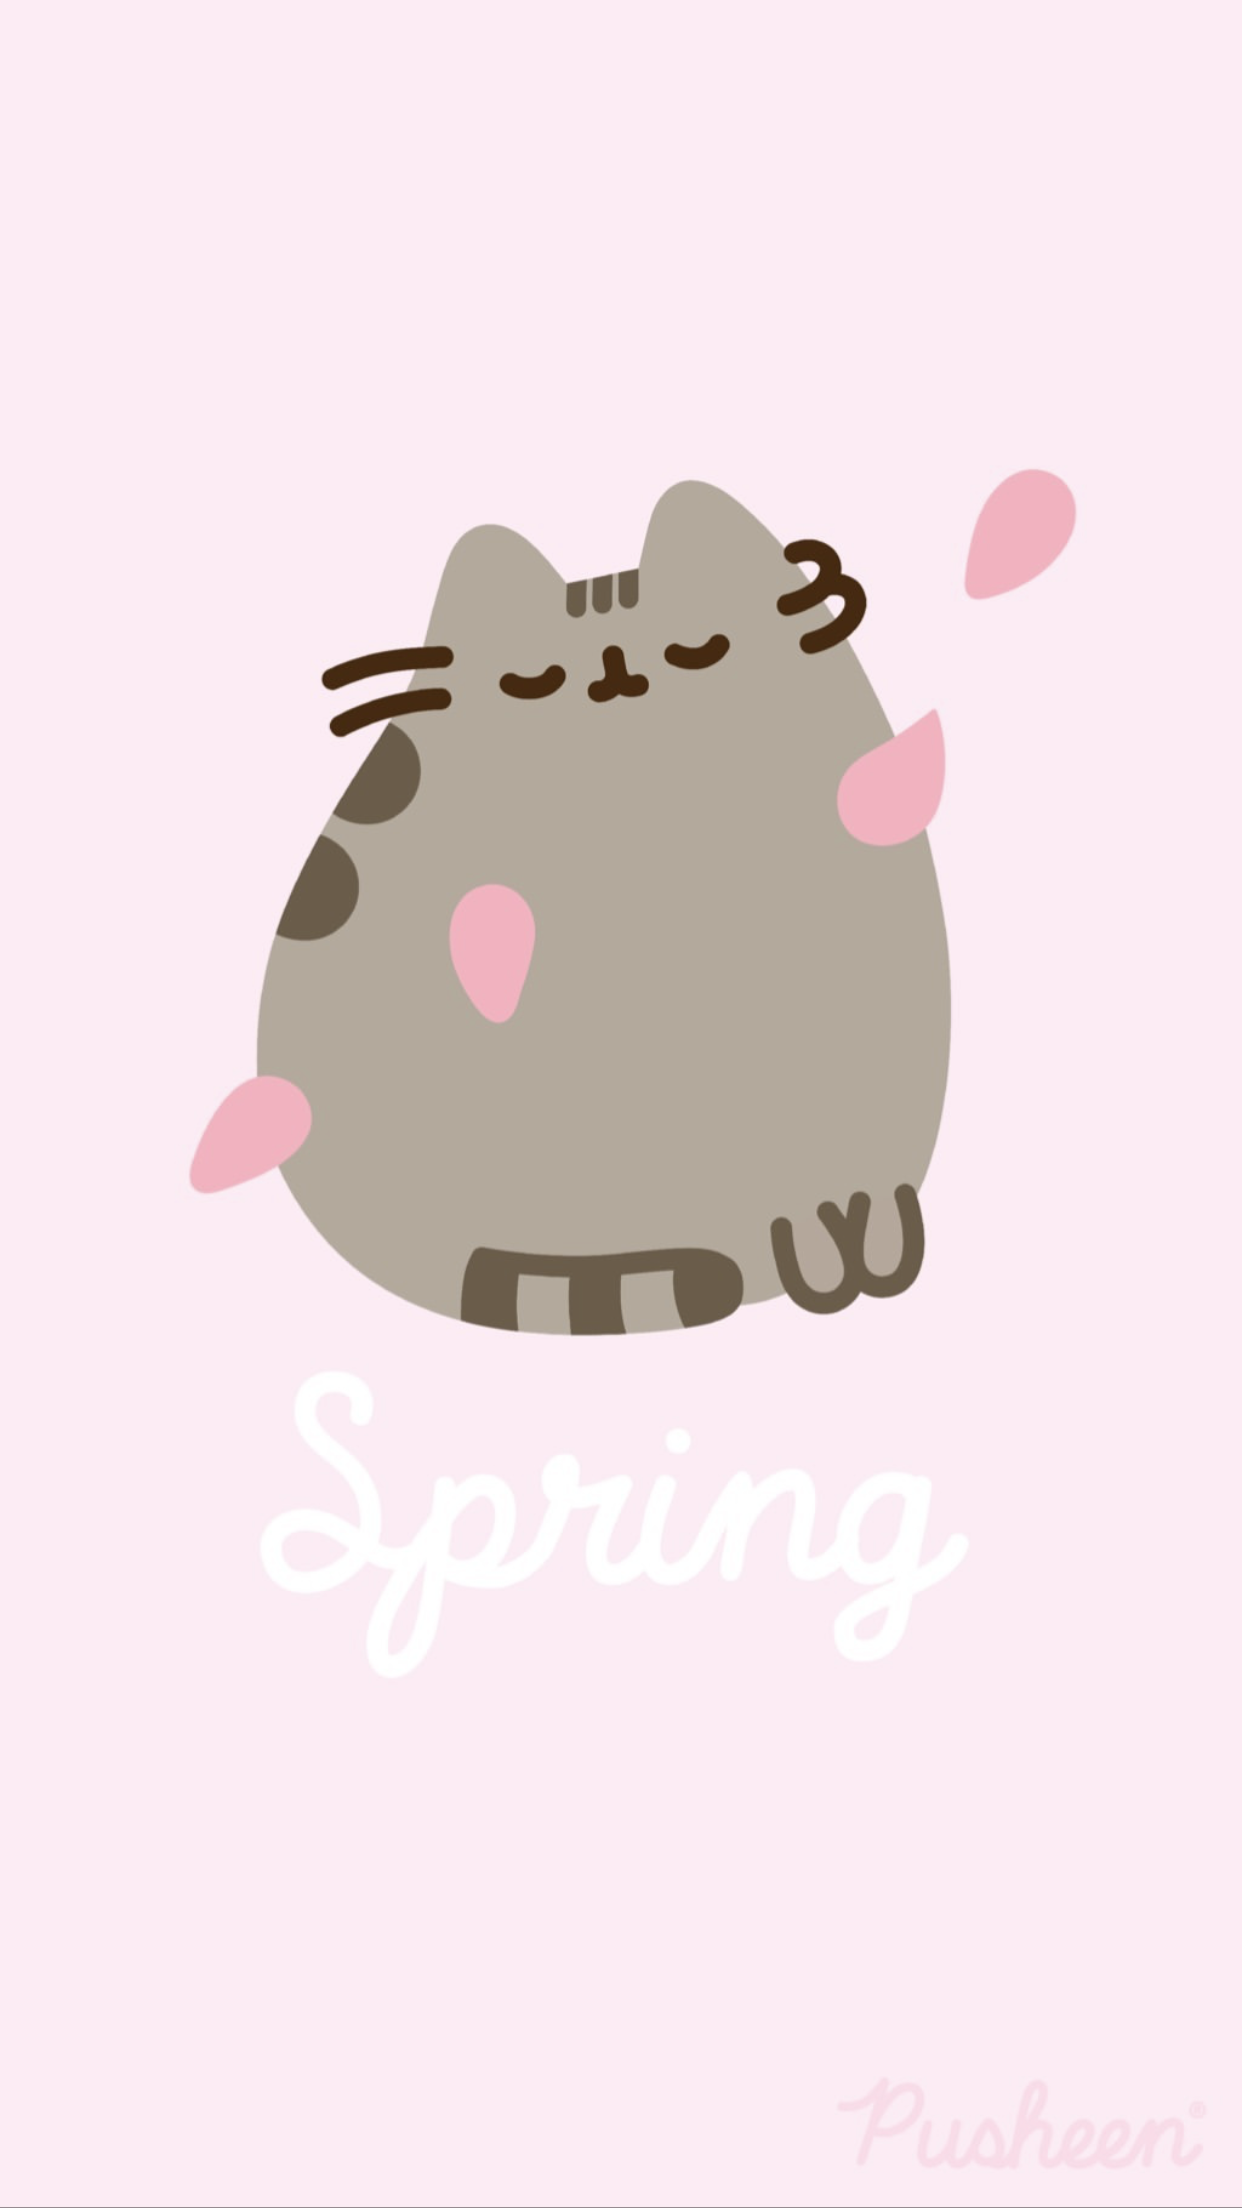 Spring Cat iPhone Wallpaper Free Spring Cat iPhone